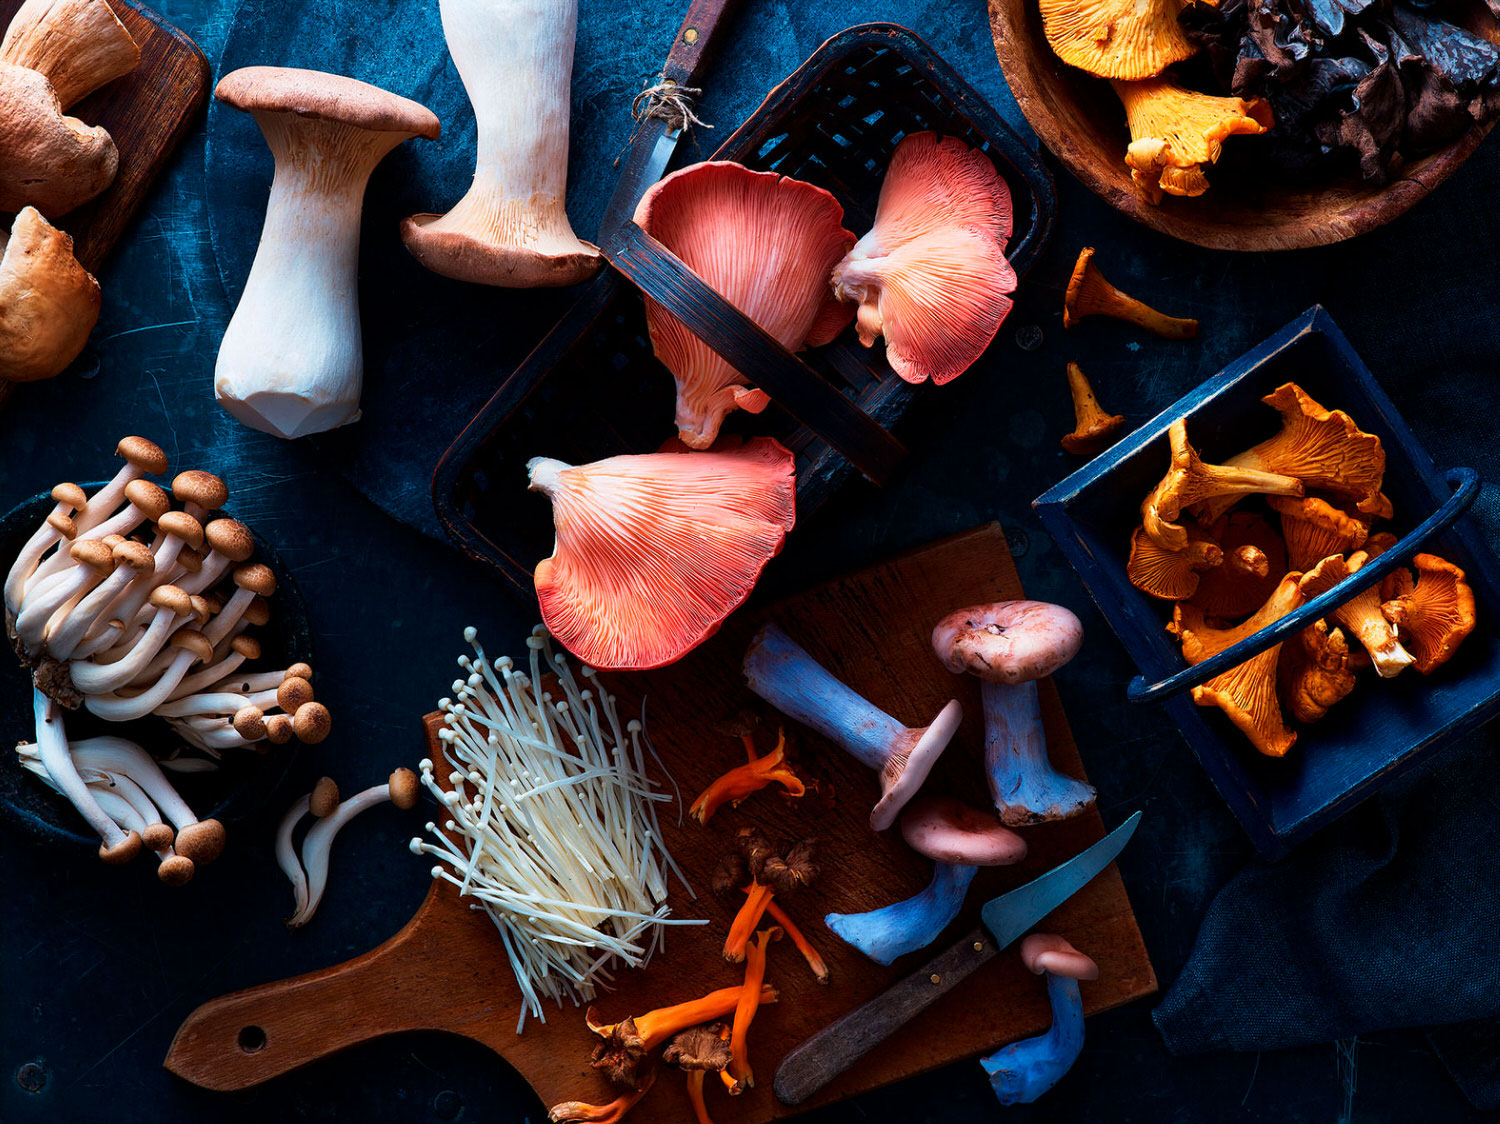 An assortment of wild mushrooms on a dark moody background  - London Food & Drinks Photographer